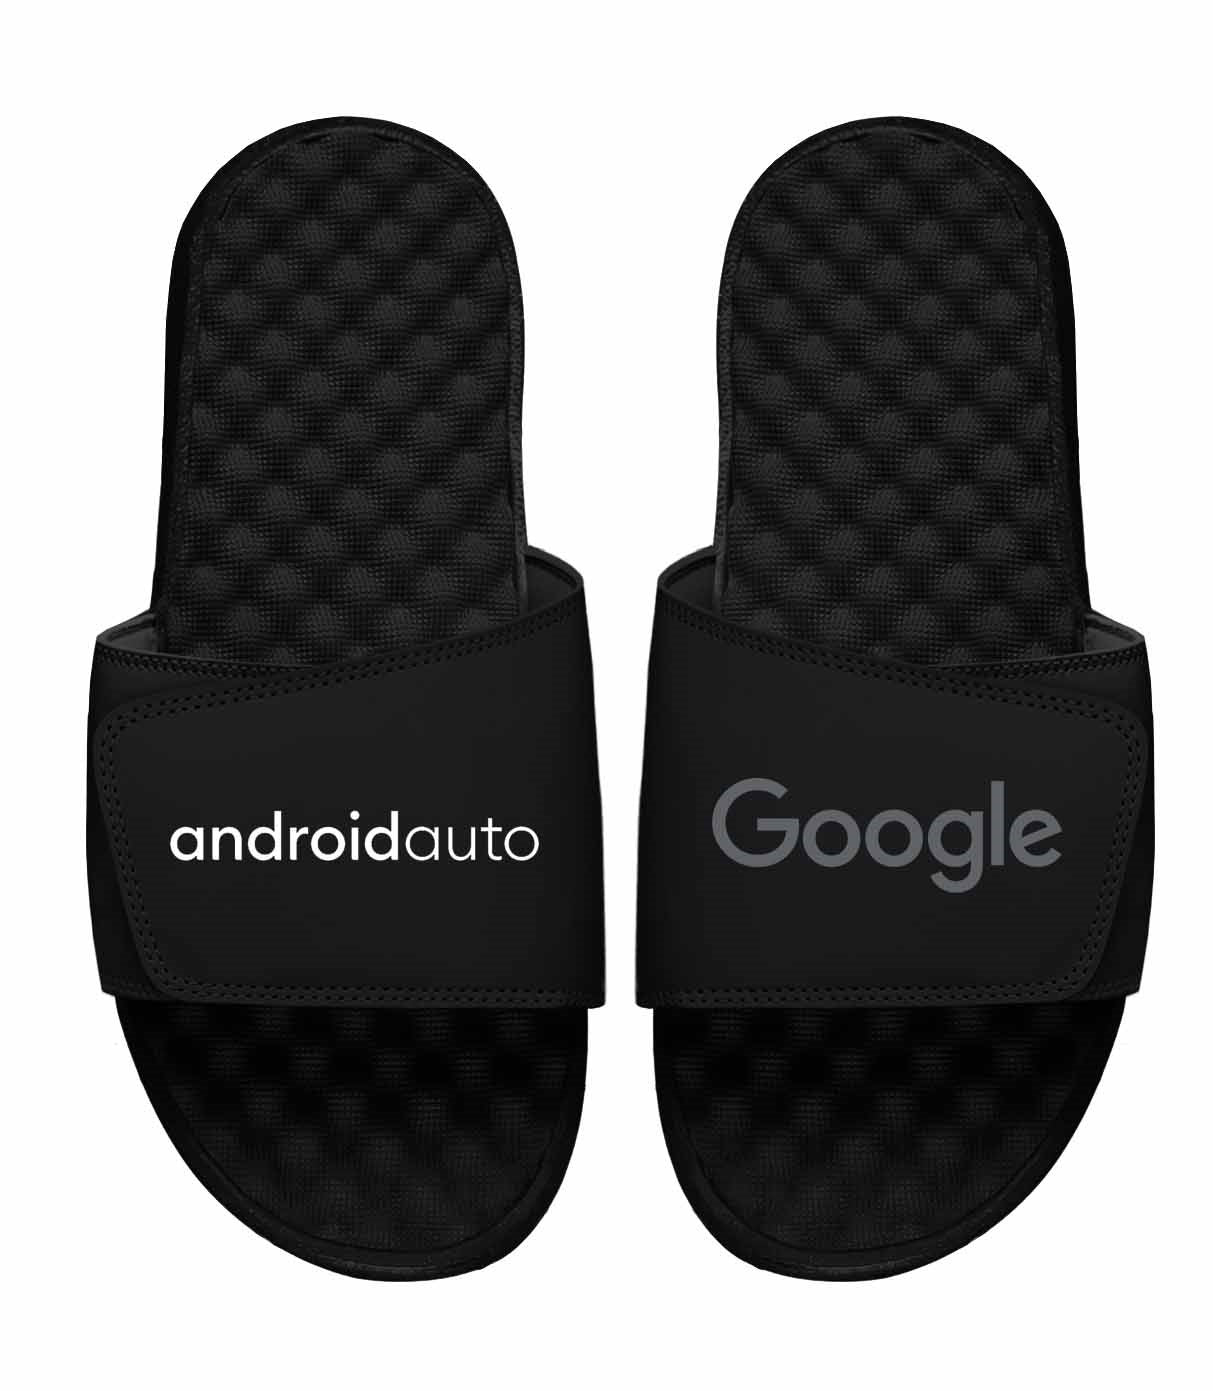 Android Auto I Slides